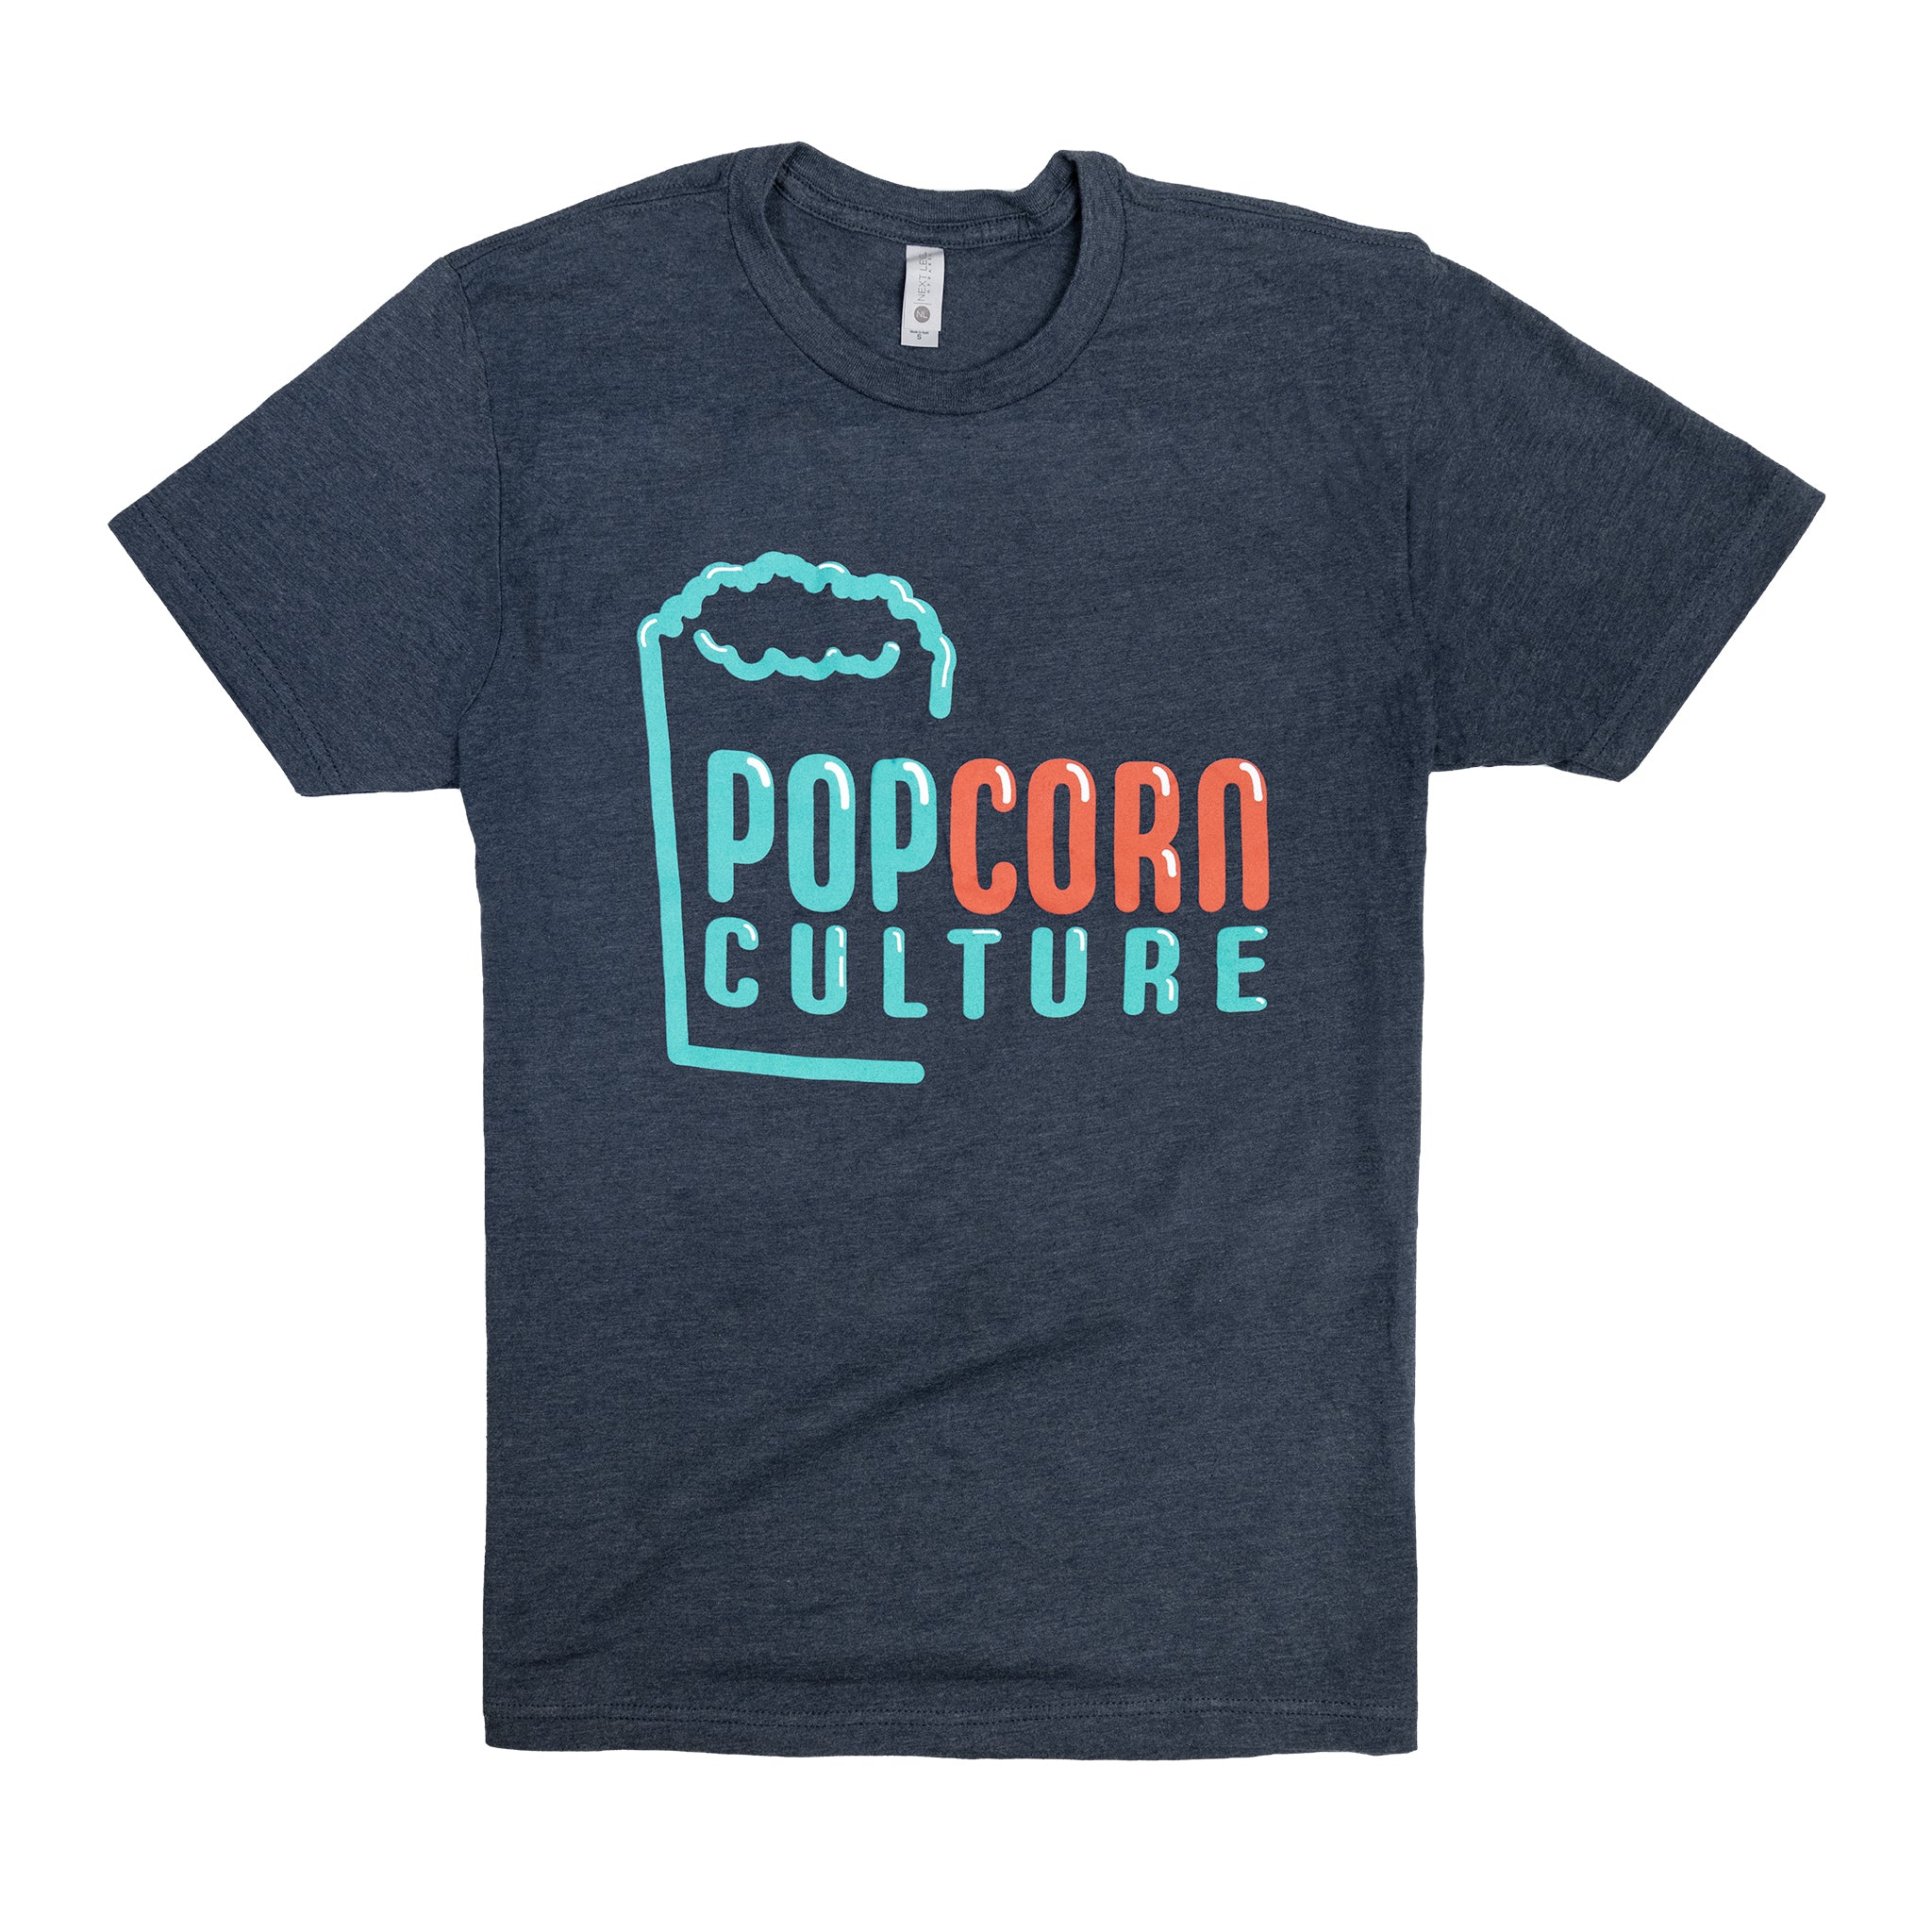 Super Carlin Brothers Gray Popcorn Culture T-Shirt